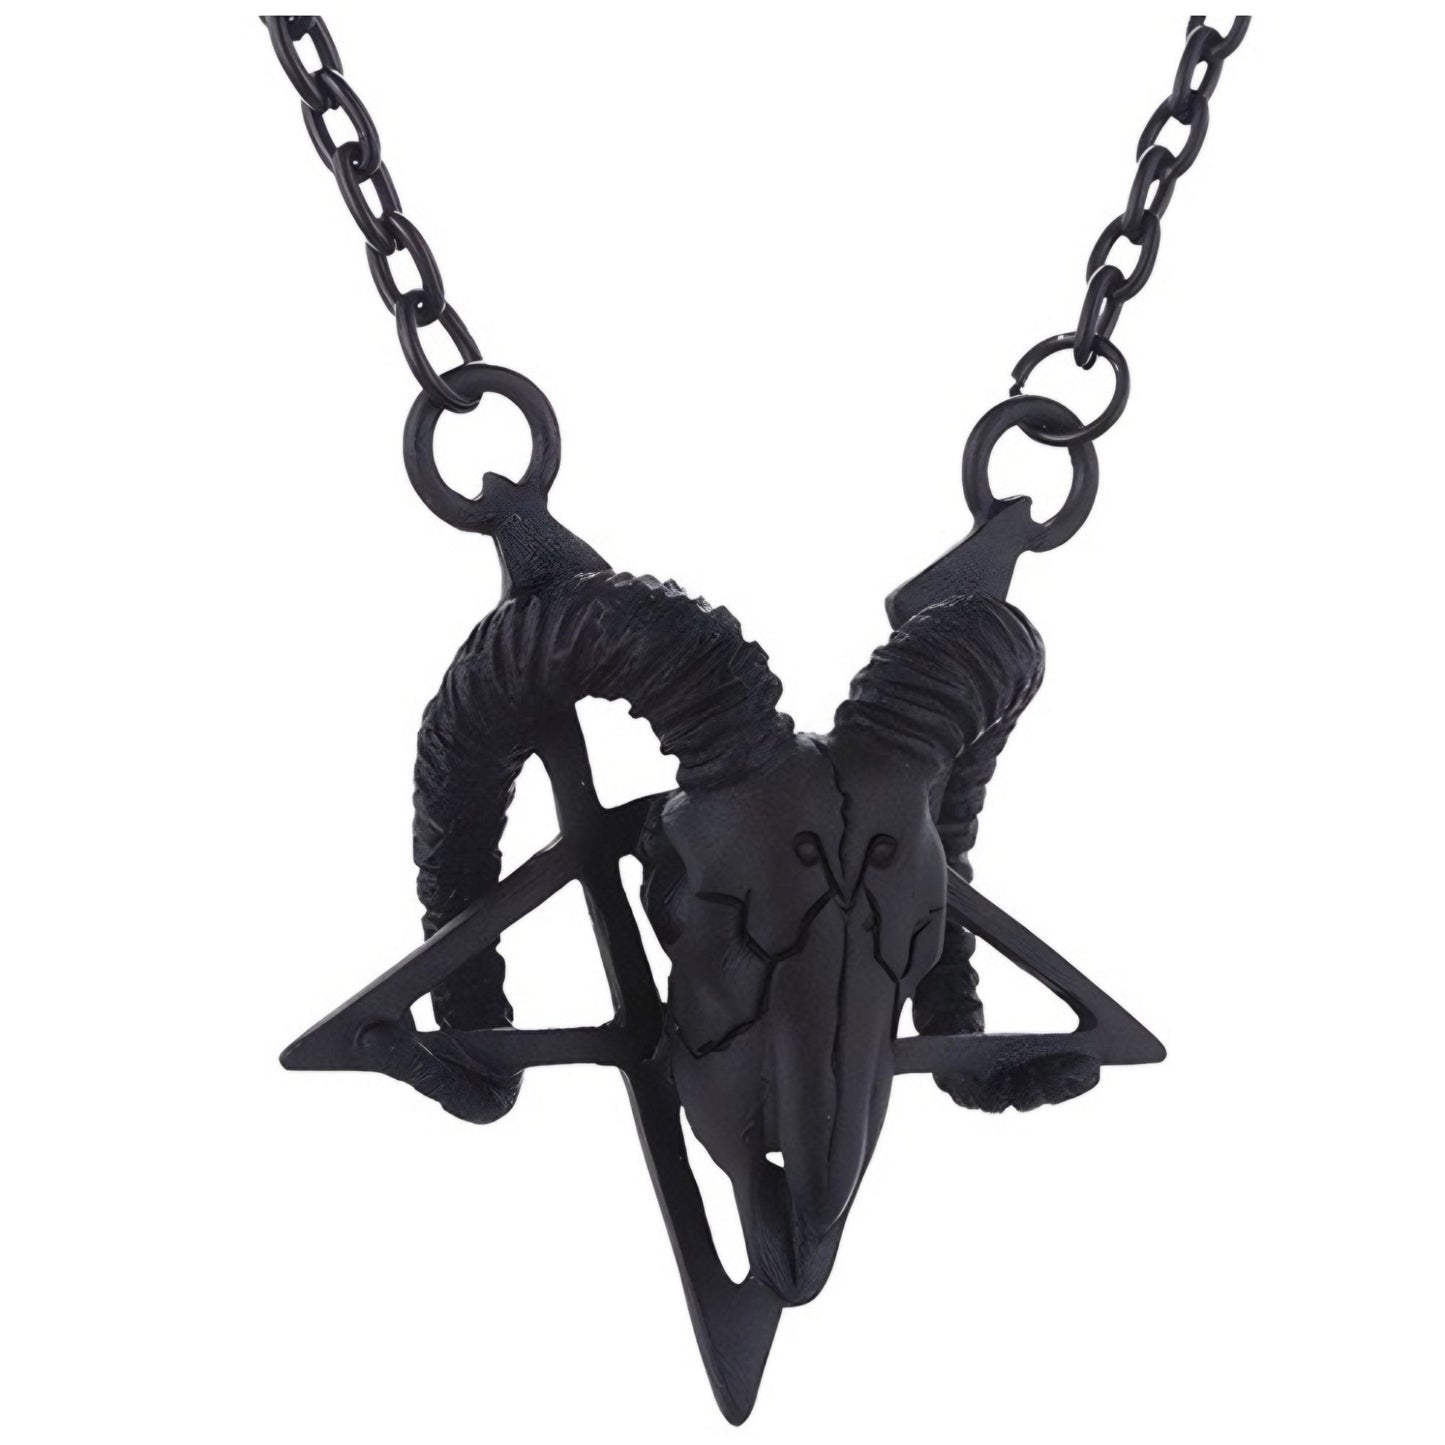 Black Ram Skull Pentagram Necklace Adjustable Chain Pagan Occult Witchcraft Amulet